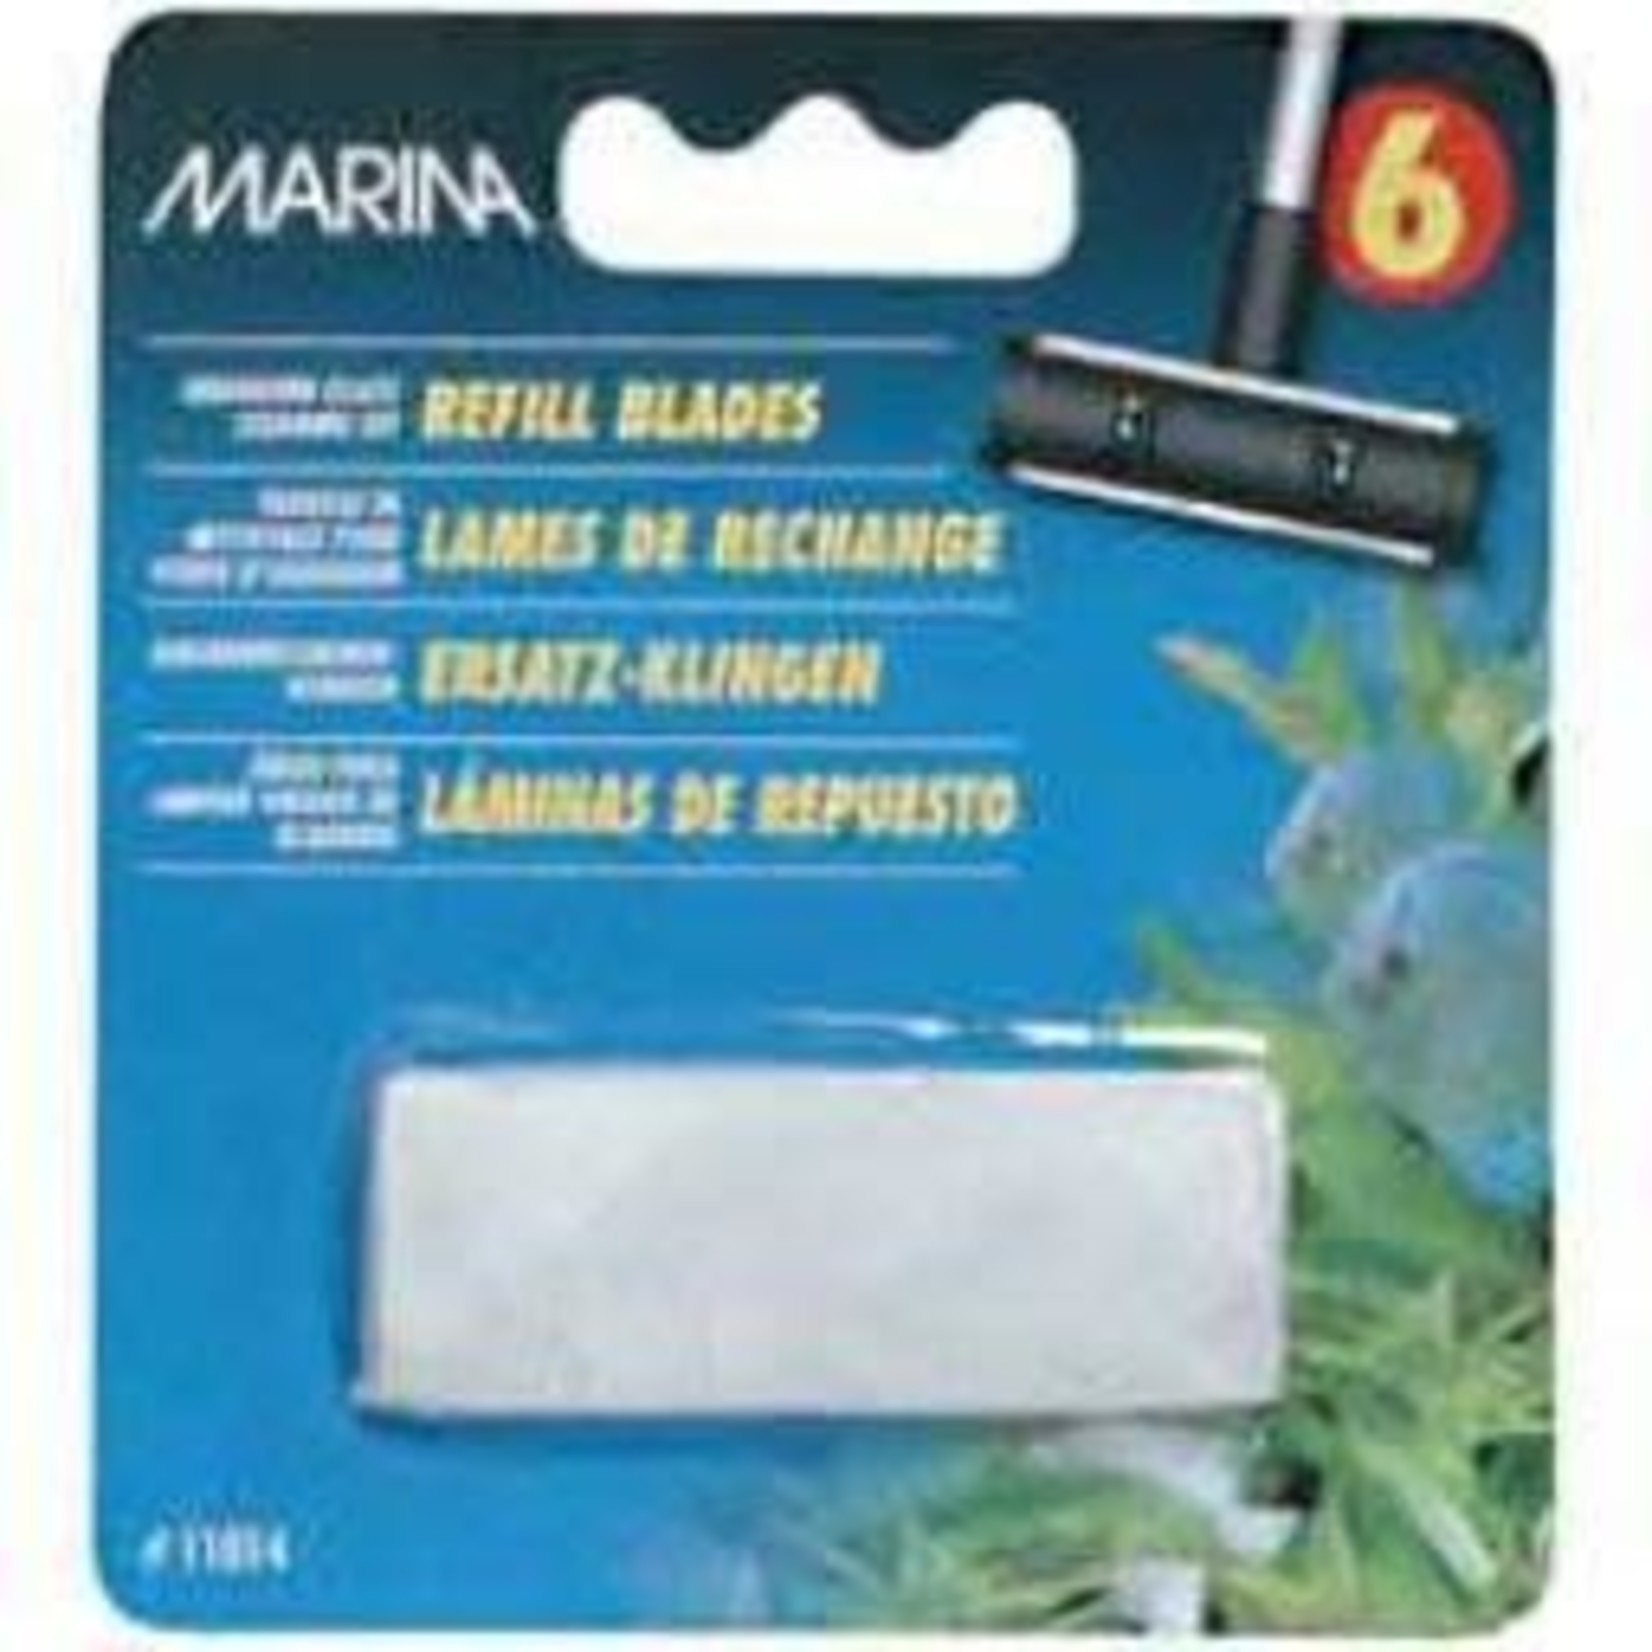 MARINA MA Aq.Glass Cleaning Refill Blades,6pk-V